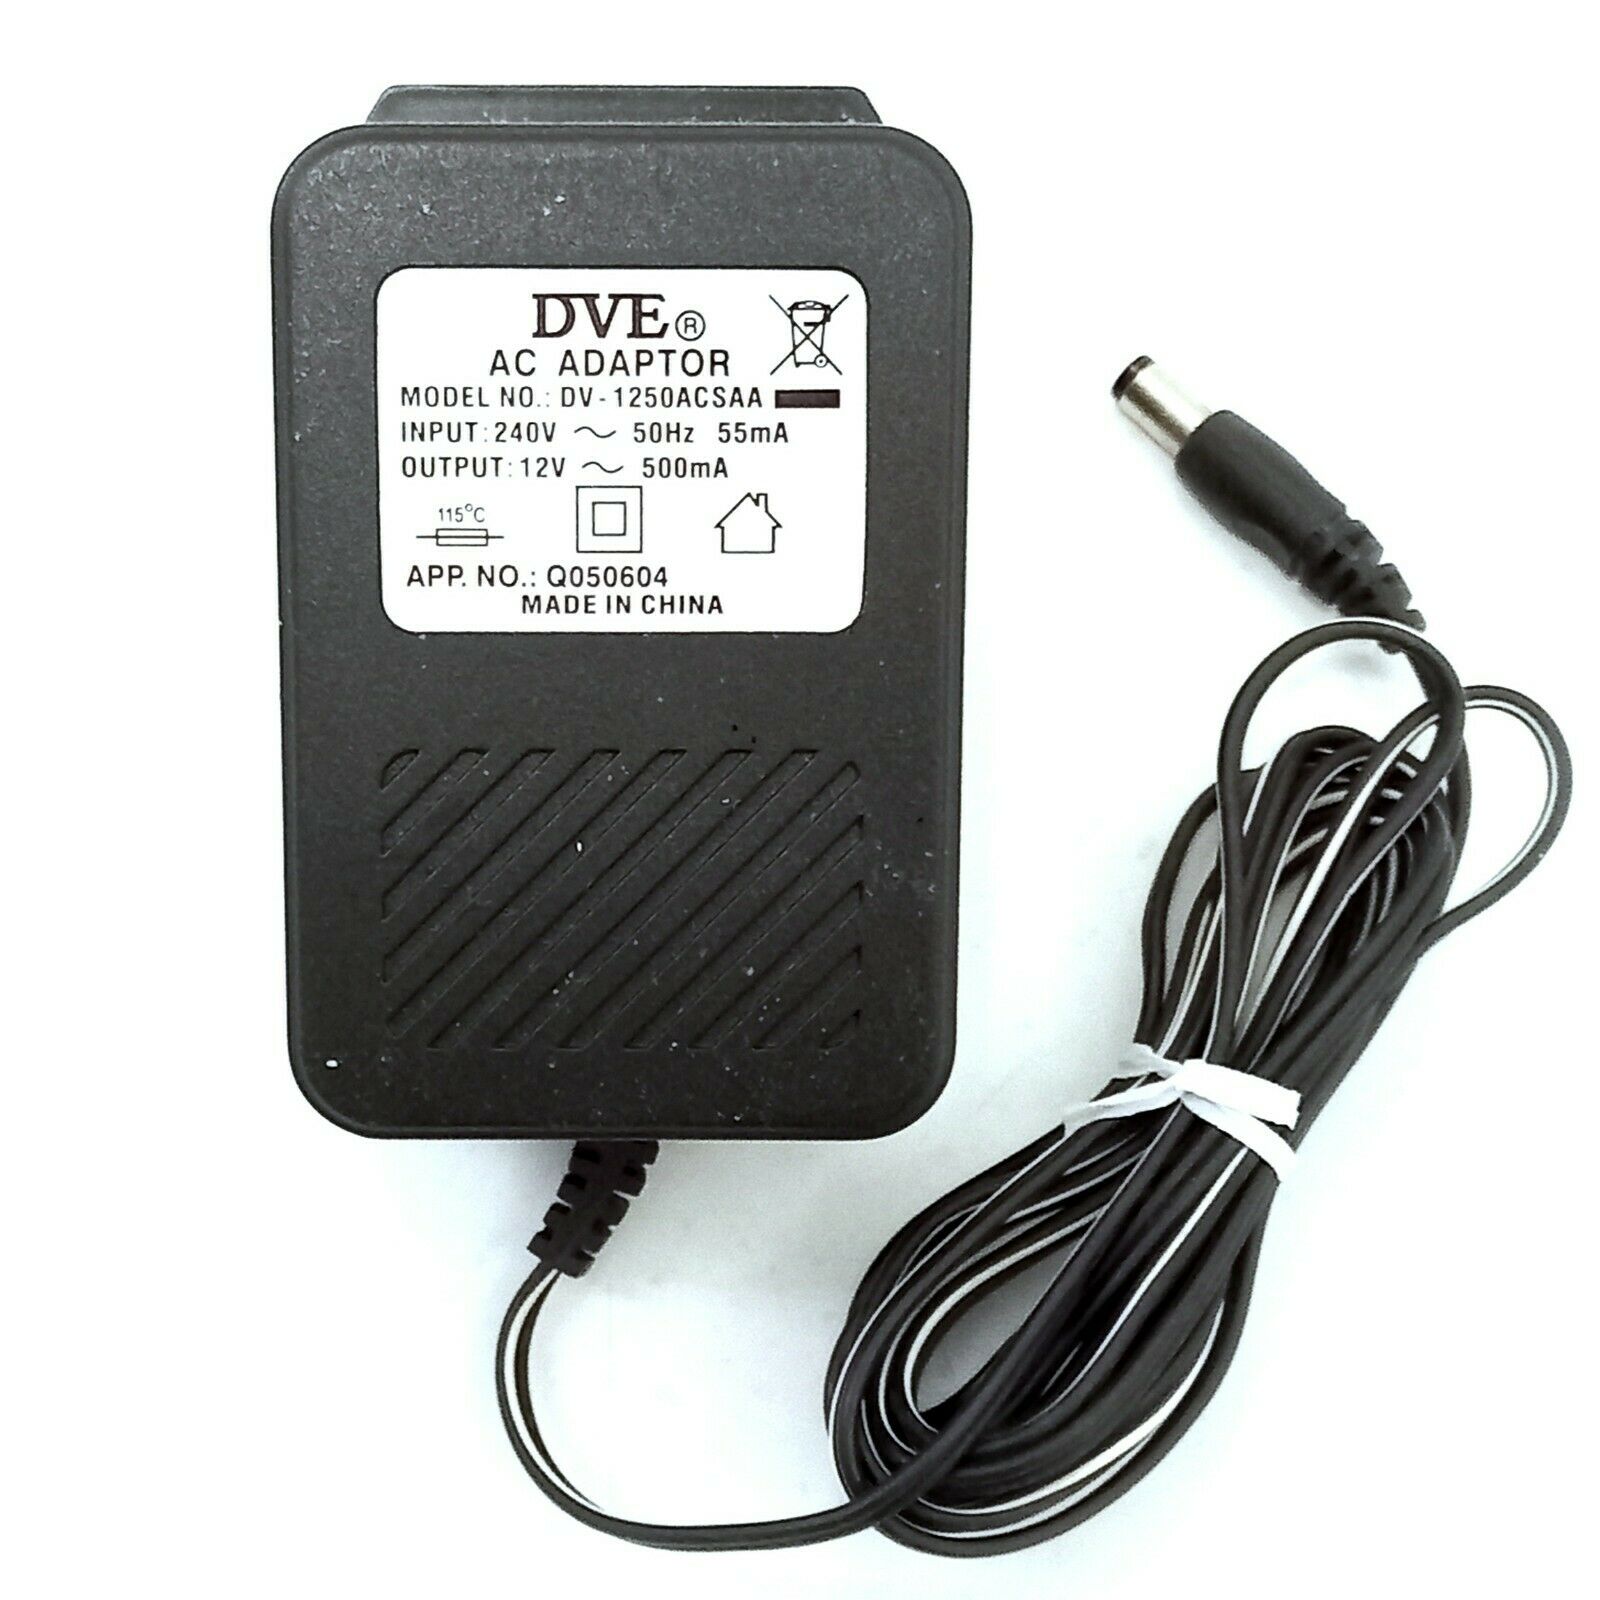 DVE AC Adapter DV-1250ACSAA 12v Power Supply Brand: DVE Output Voltage: 12 V Type: AC/DC Adapter Colour: Black Connecti